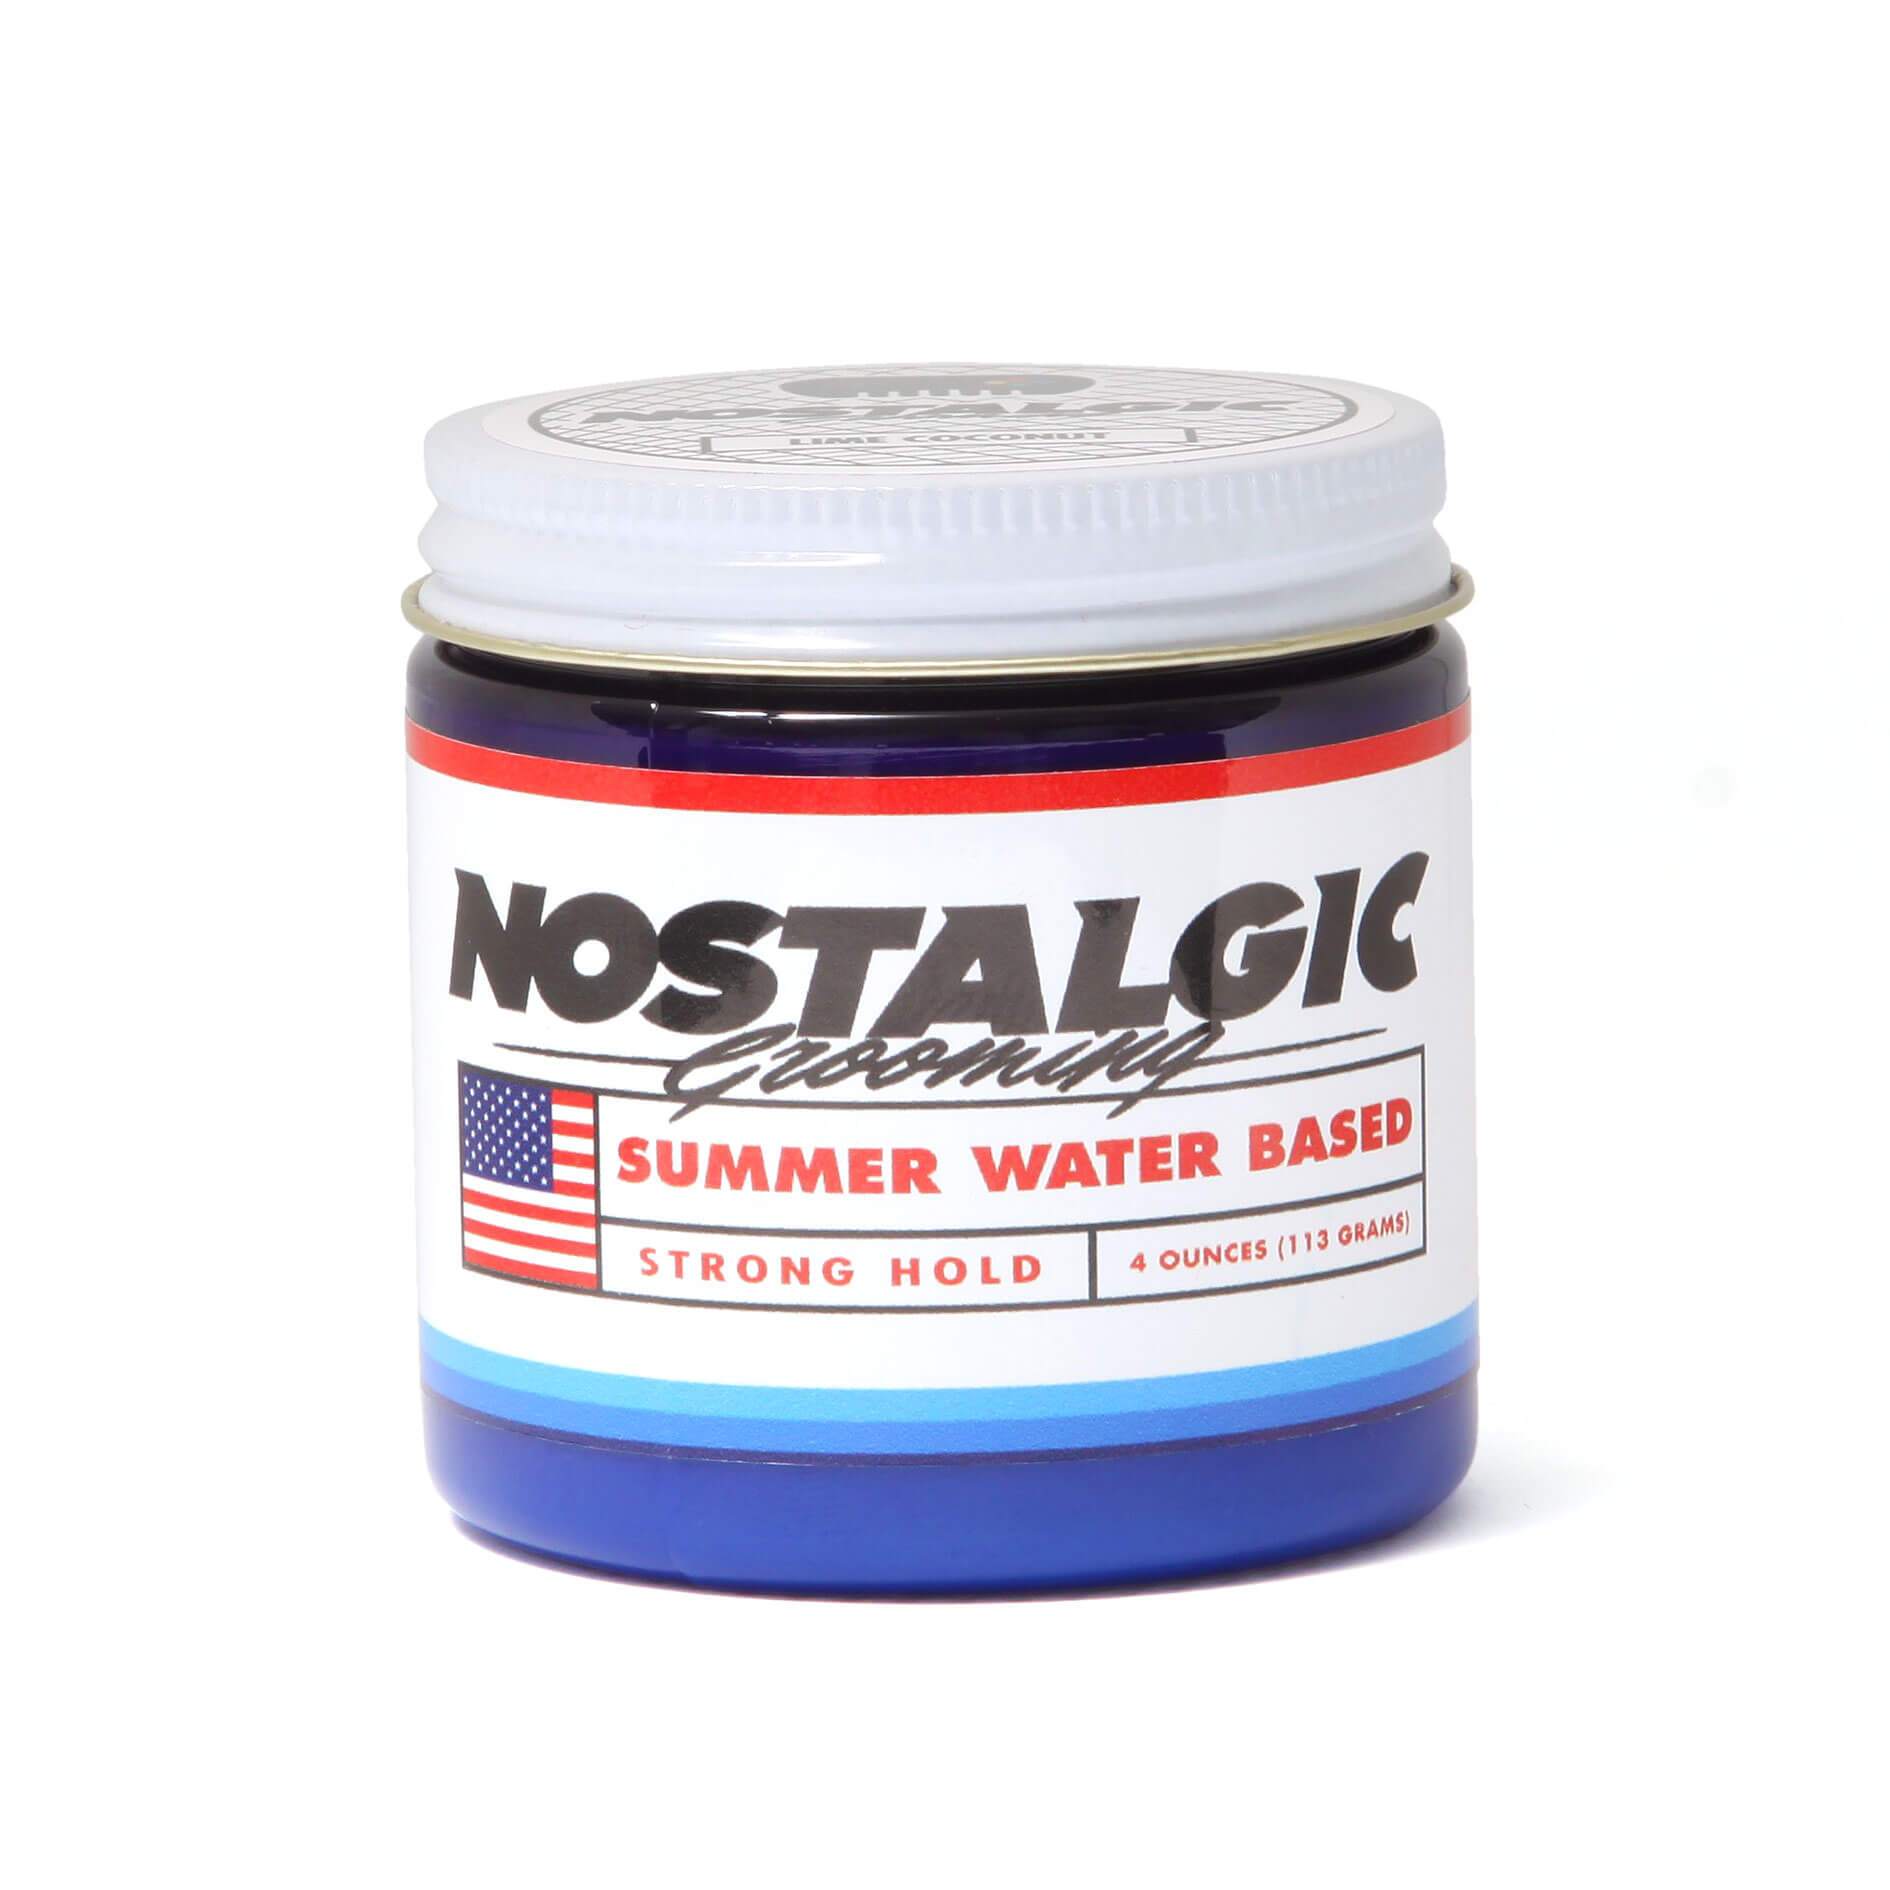 Nostalgic Grooming Summer Water Based Pomade